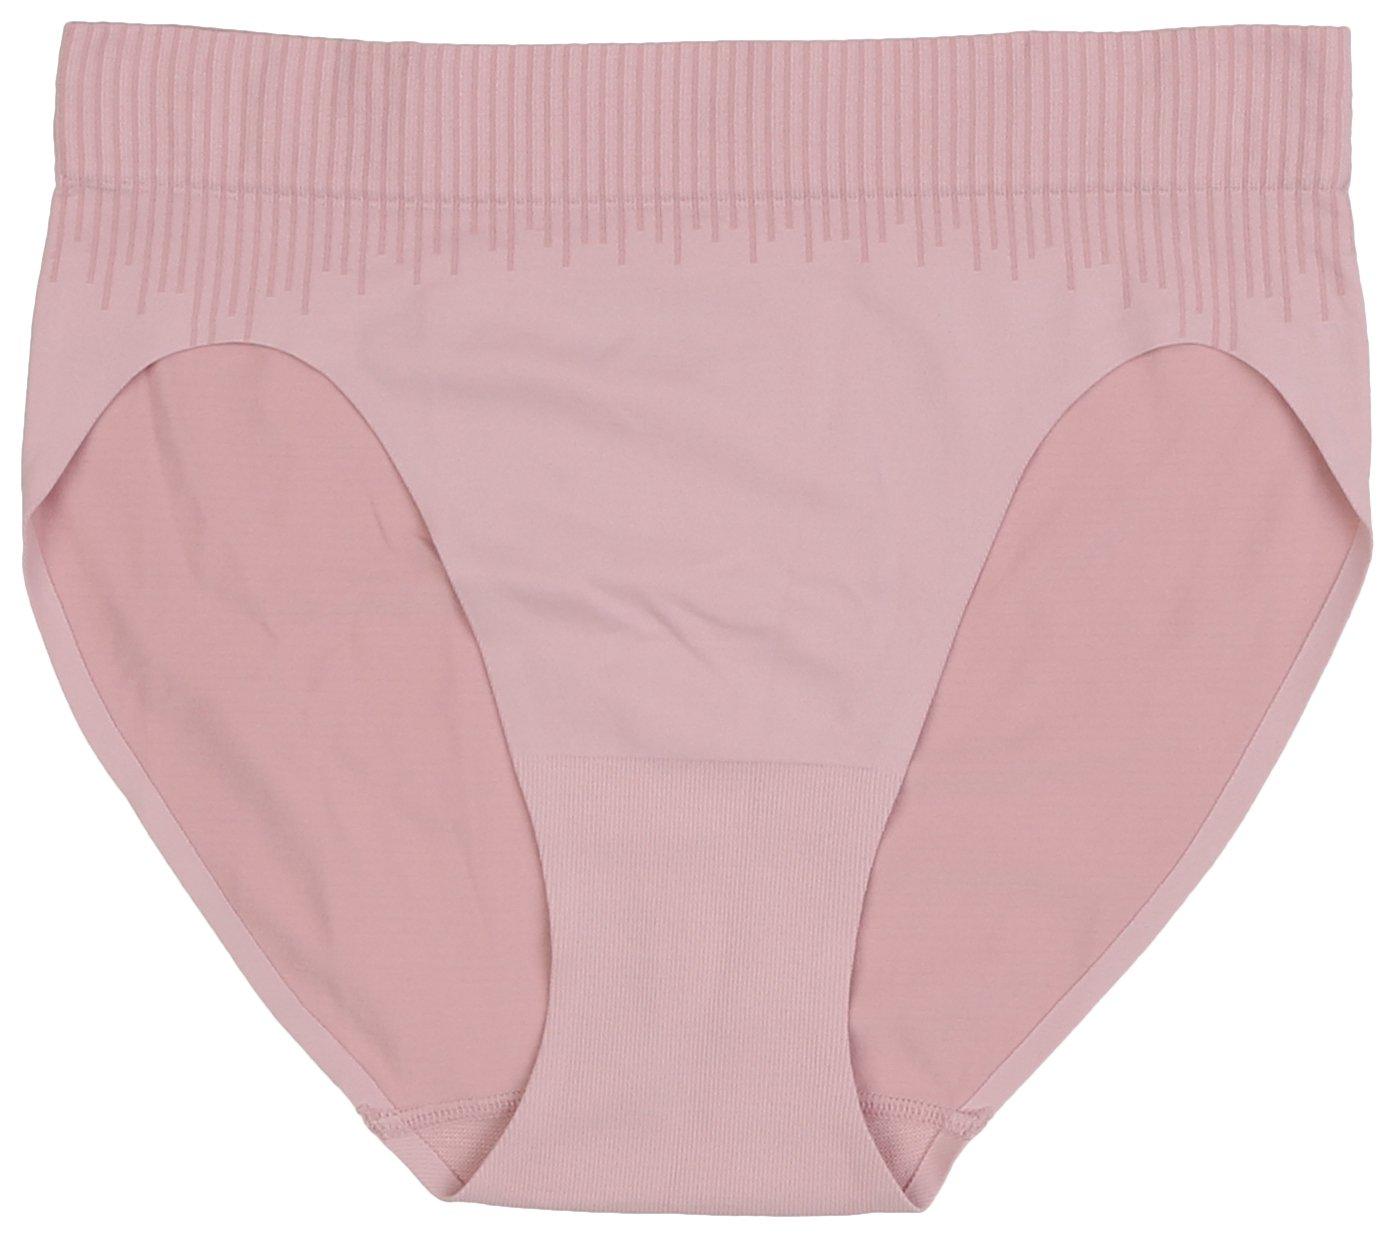 Comfort Revolution Seamless Hi-Cut Brief Panties MSHC